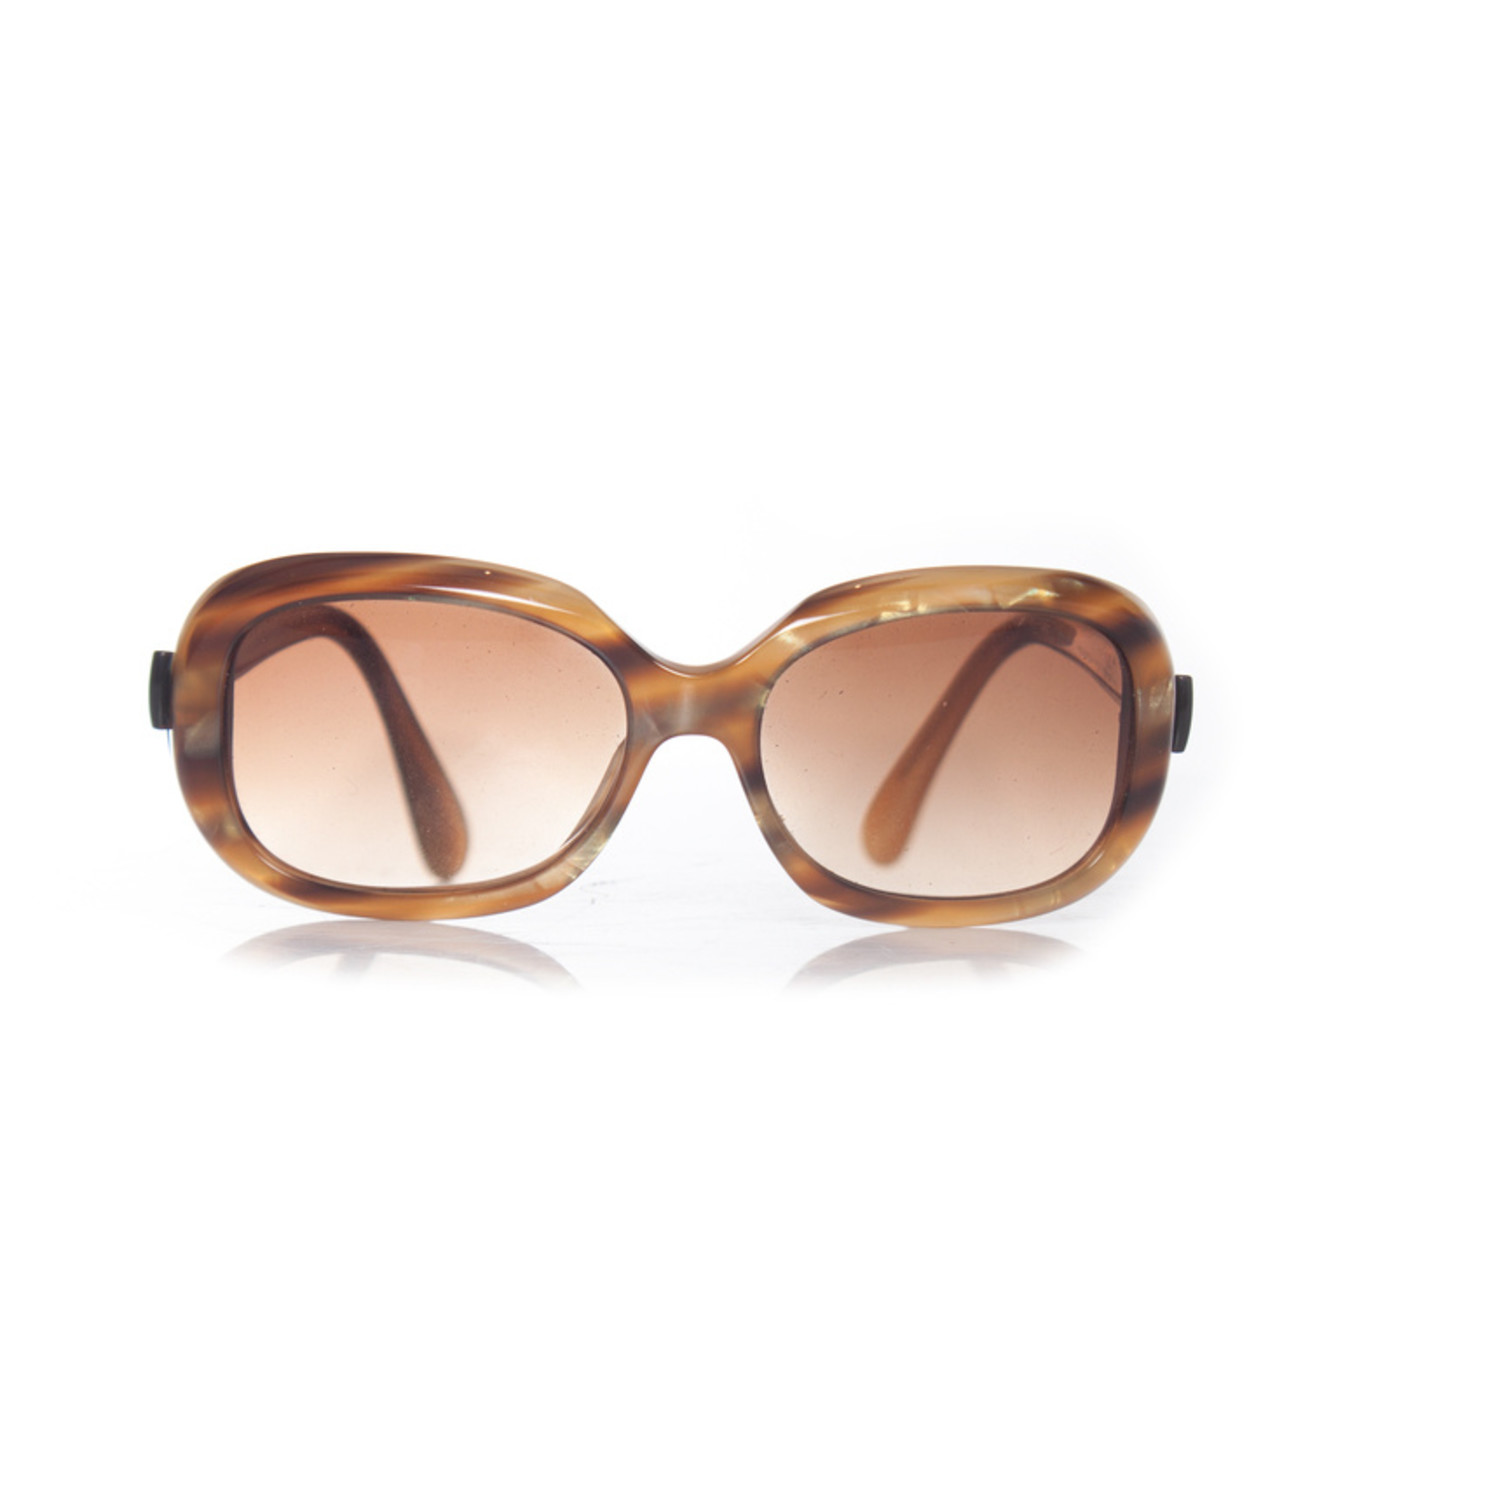 Chanel, Sunglasses with tortoise print - Unique Designer Pieces